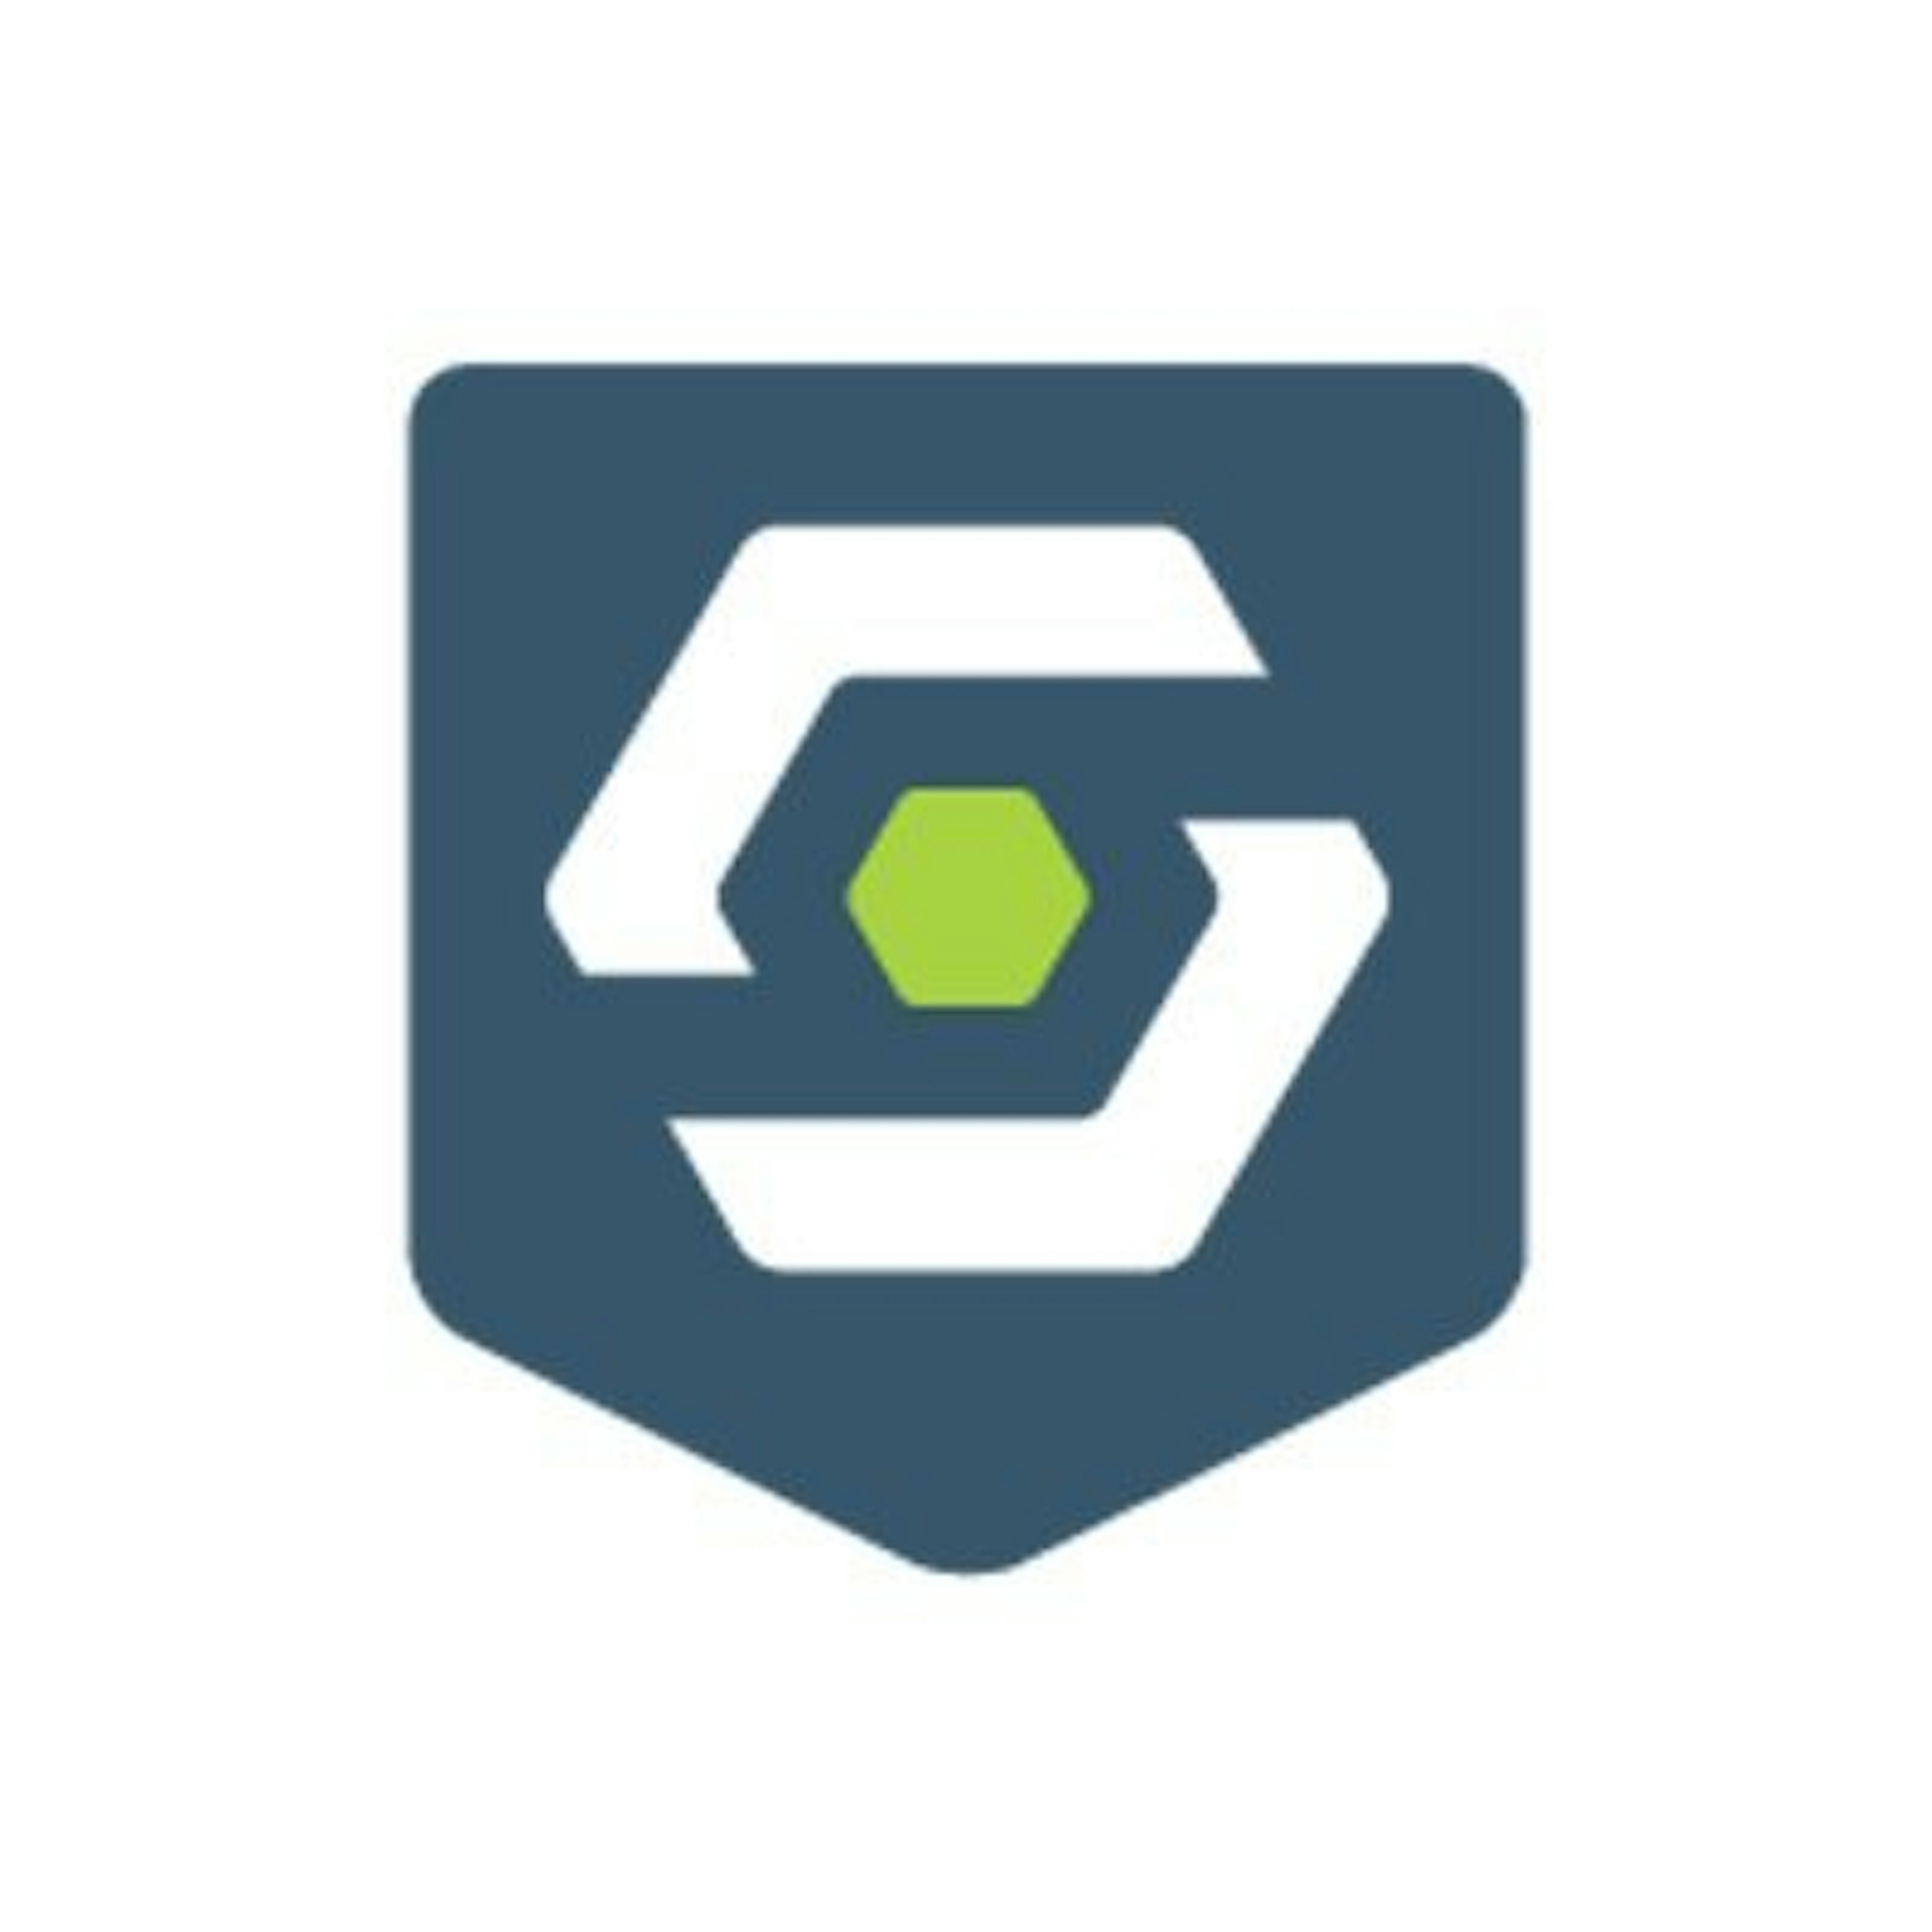 SciShield Logo